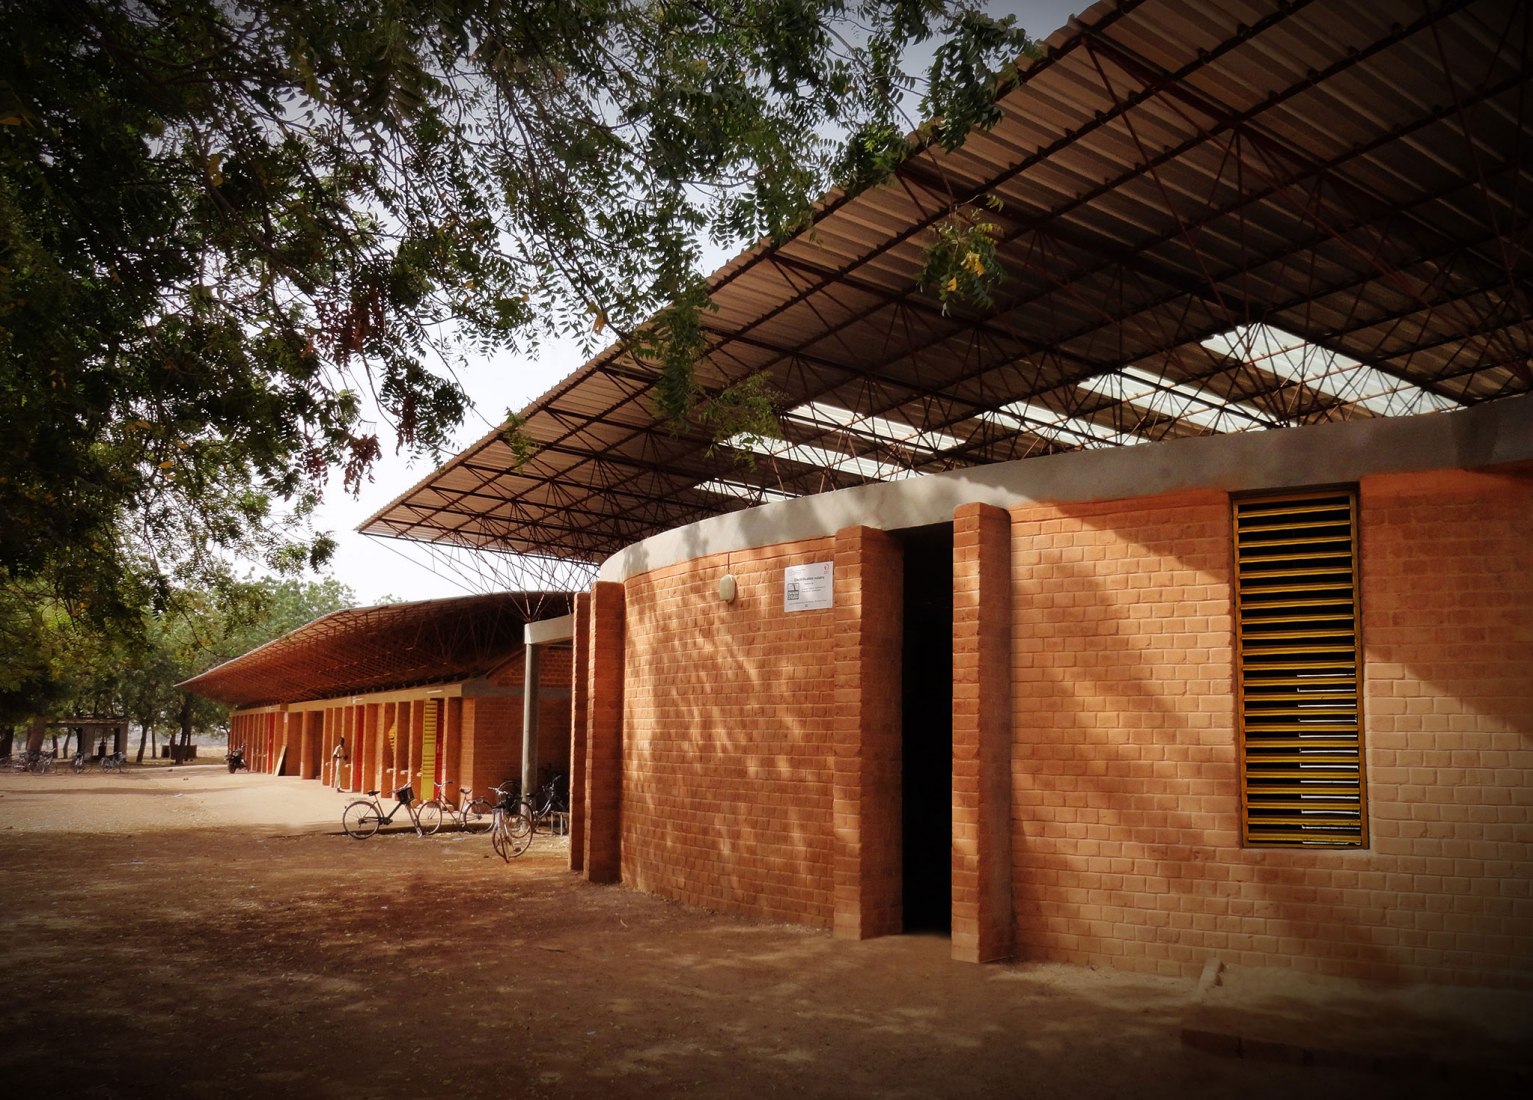 Gando Primary School Library by Kéré Architecture. Photograph by Francis Kéré